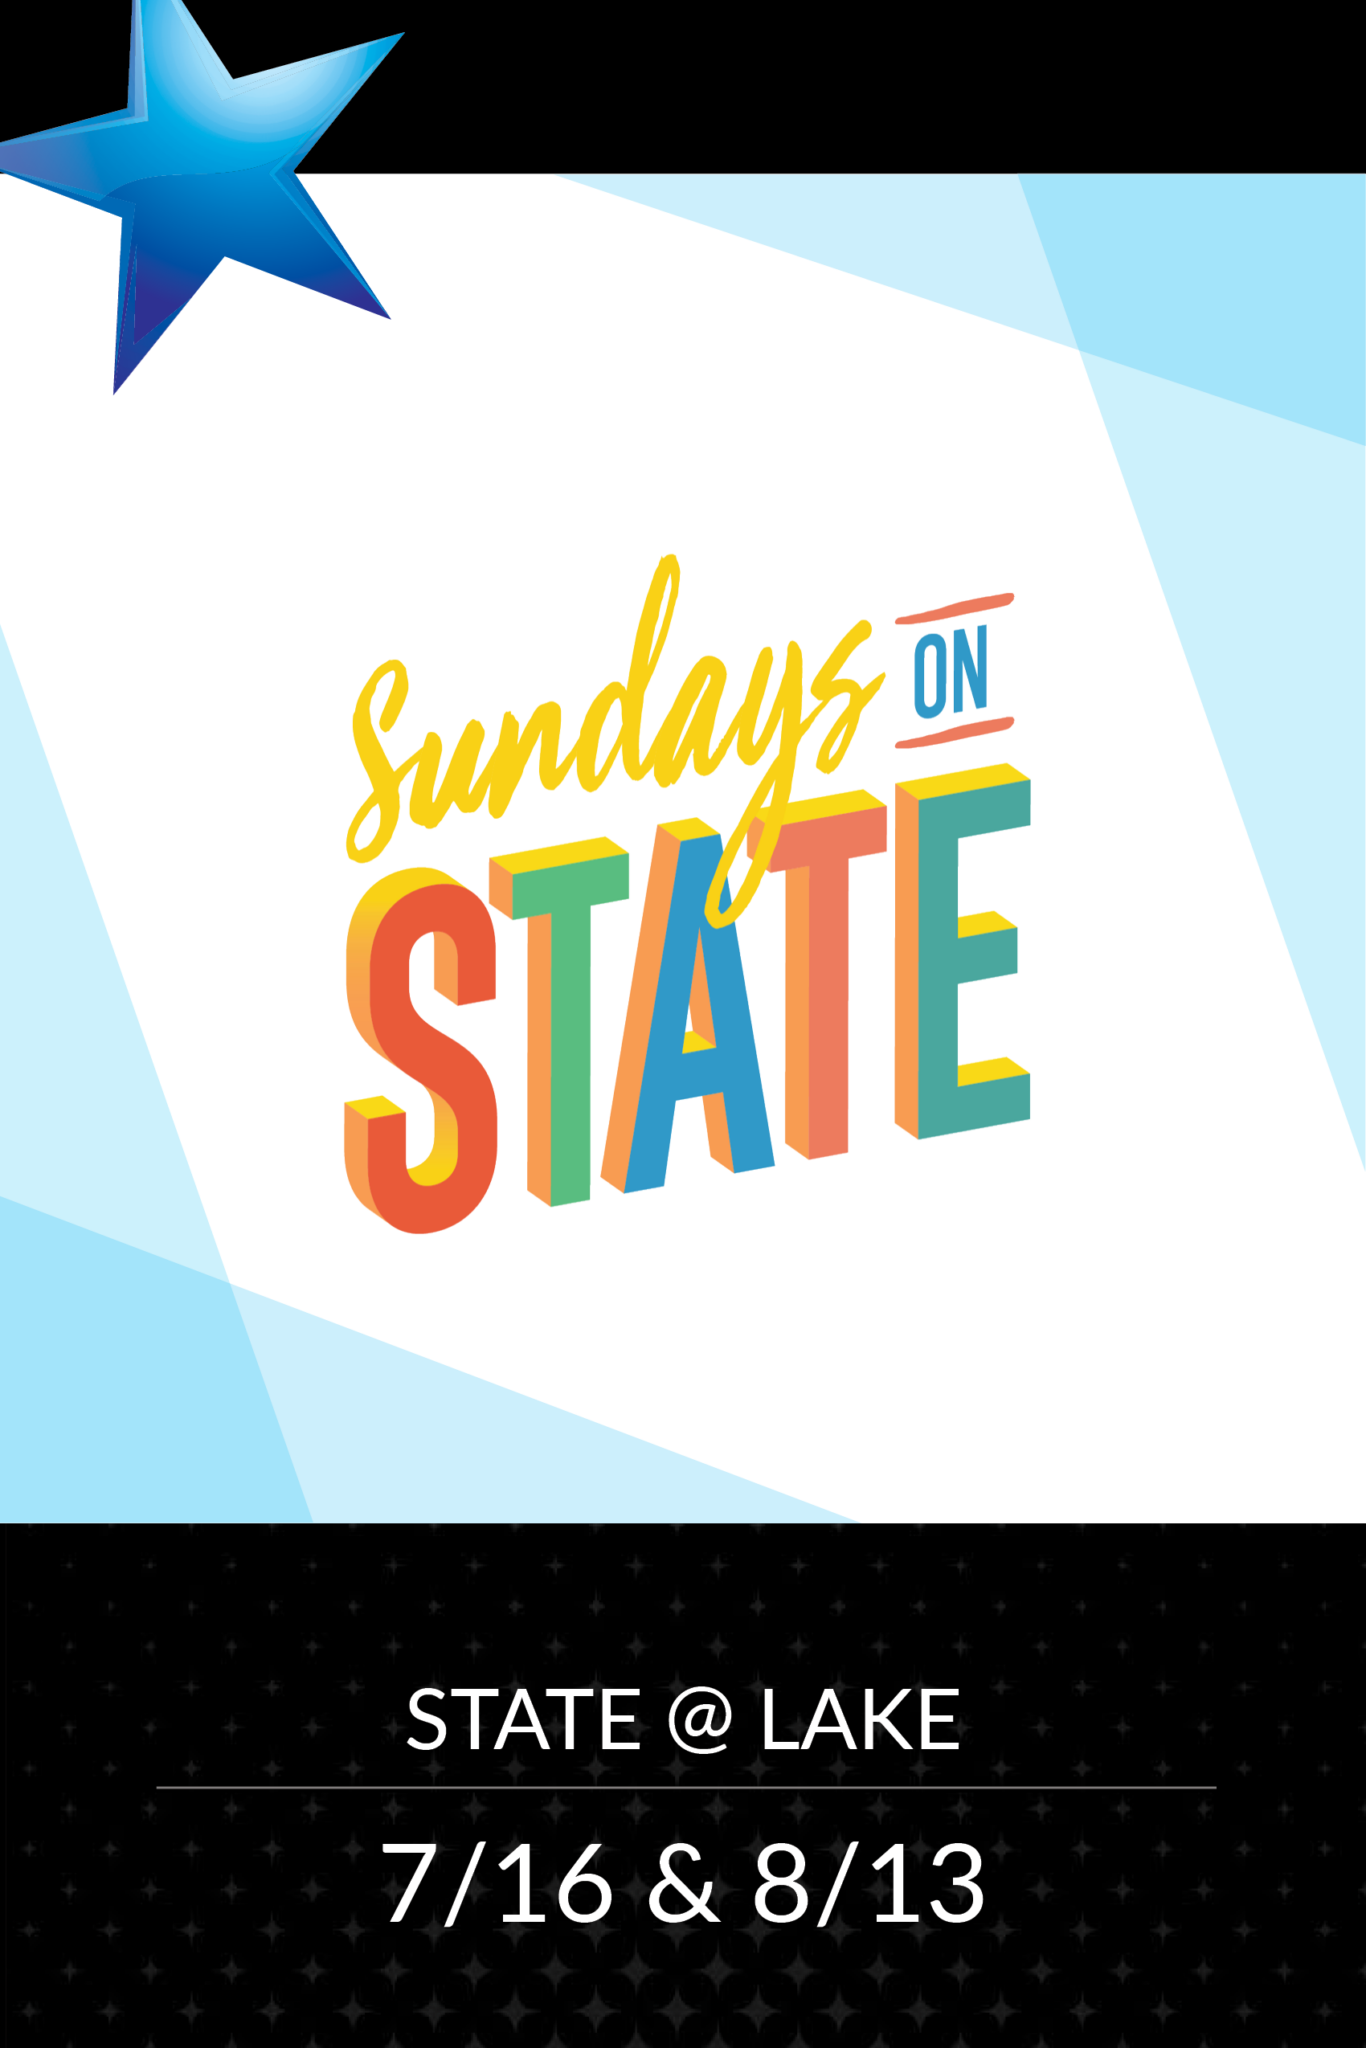 Sundays On State StarEvents